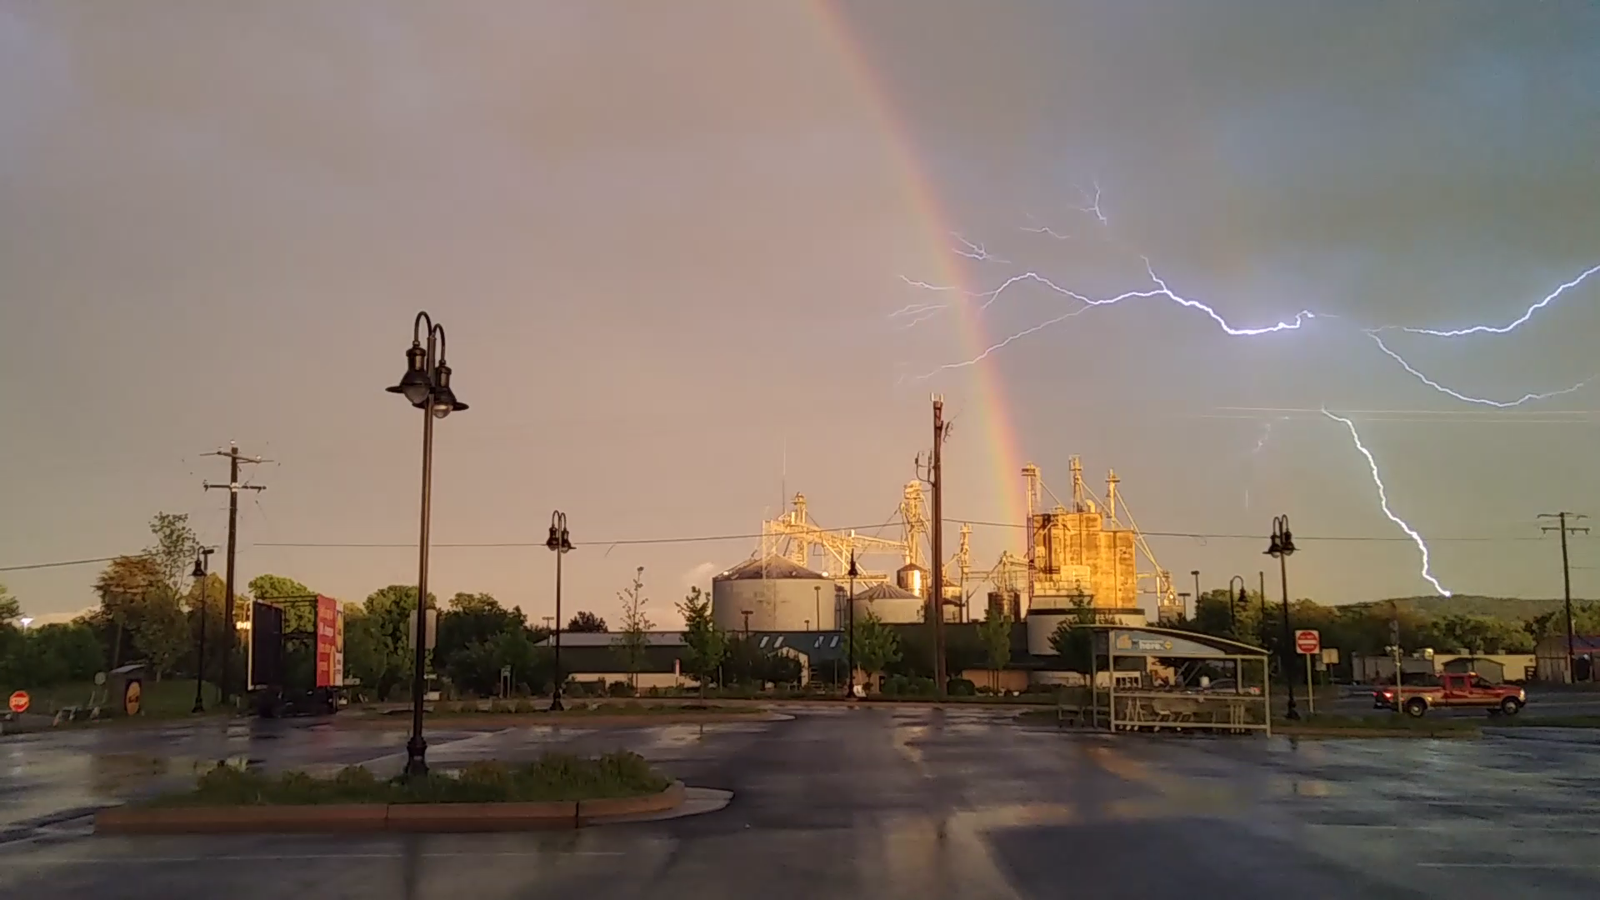 A rainbow and a bolt of lightning share the sky over Culpeper, Virginia. (Courtesy Todd Durica)